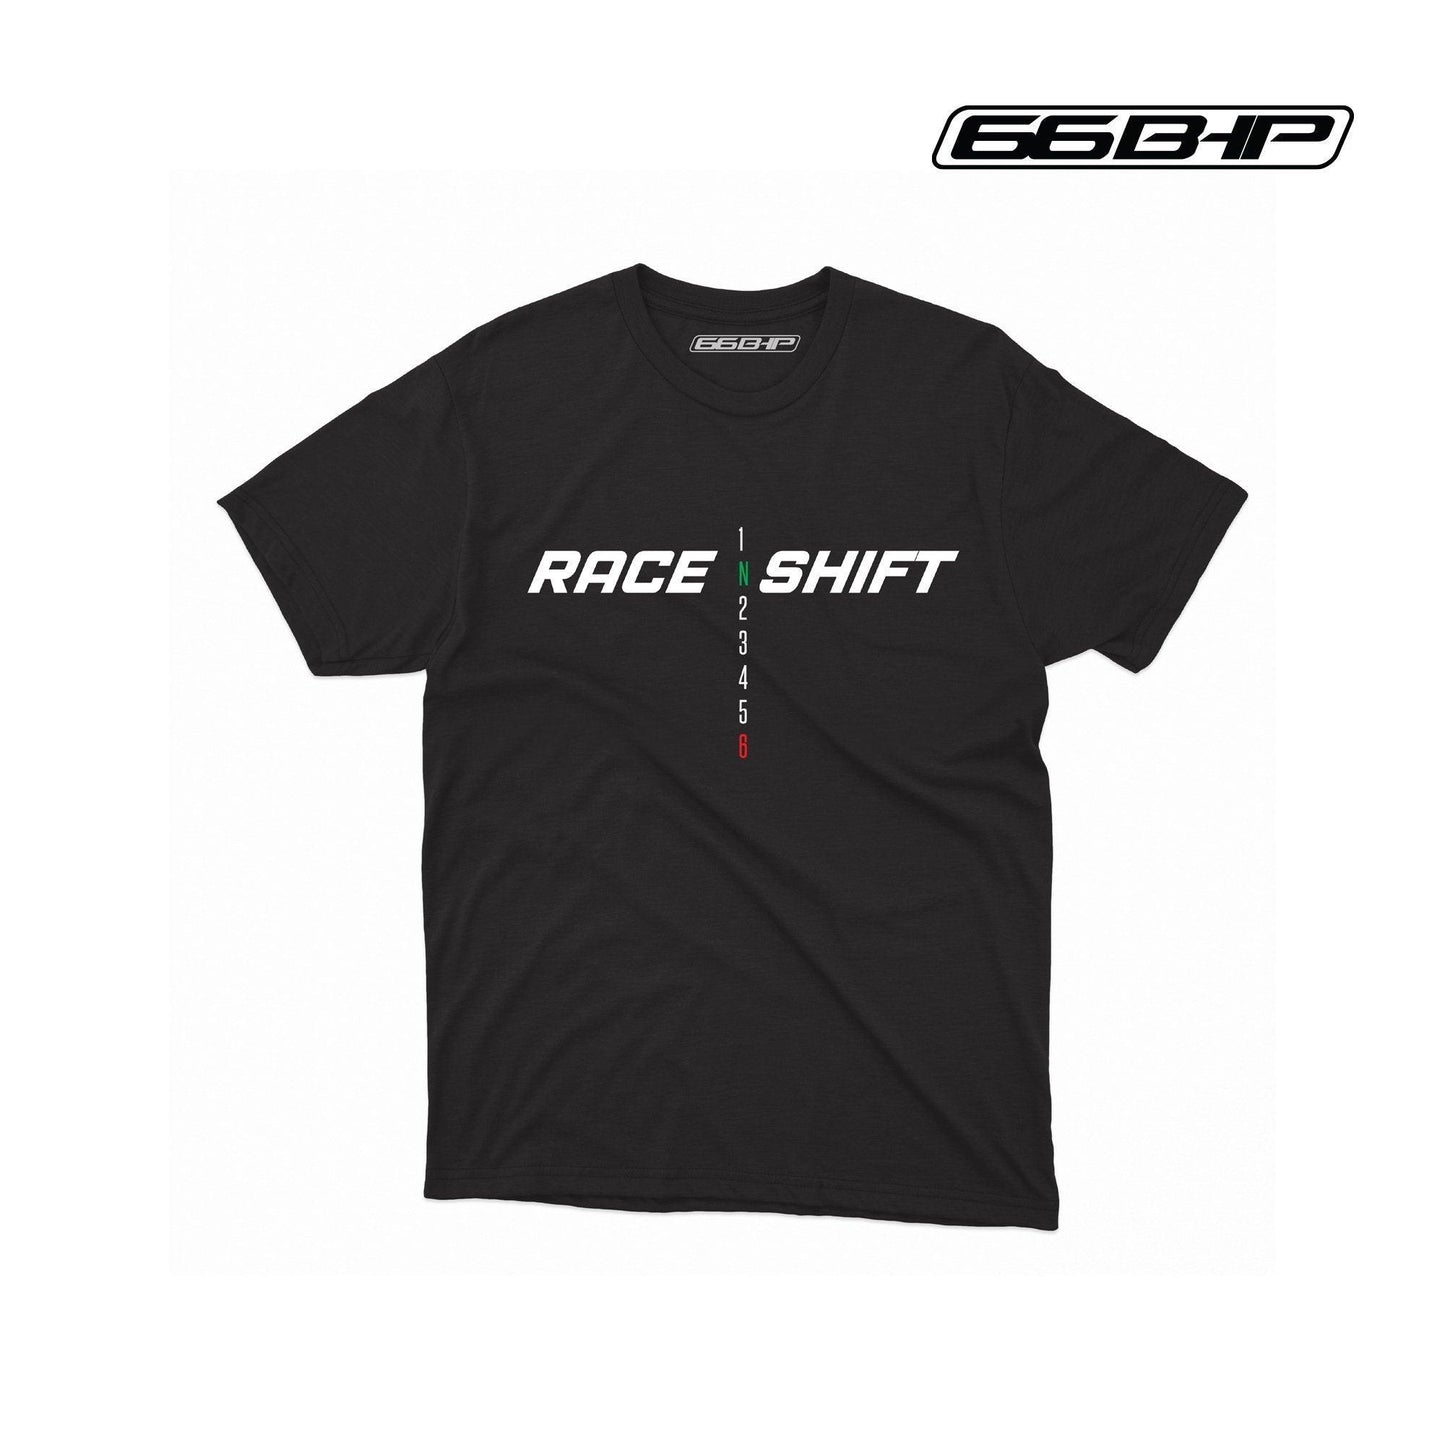 Biker T-Shirt Black for Men  66BHP - Moto Modz